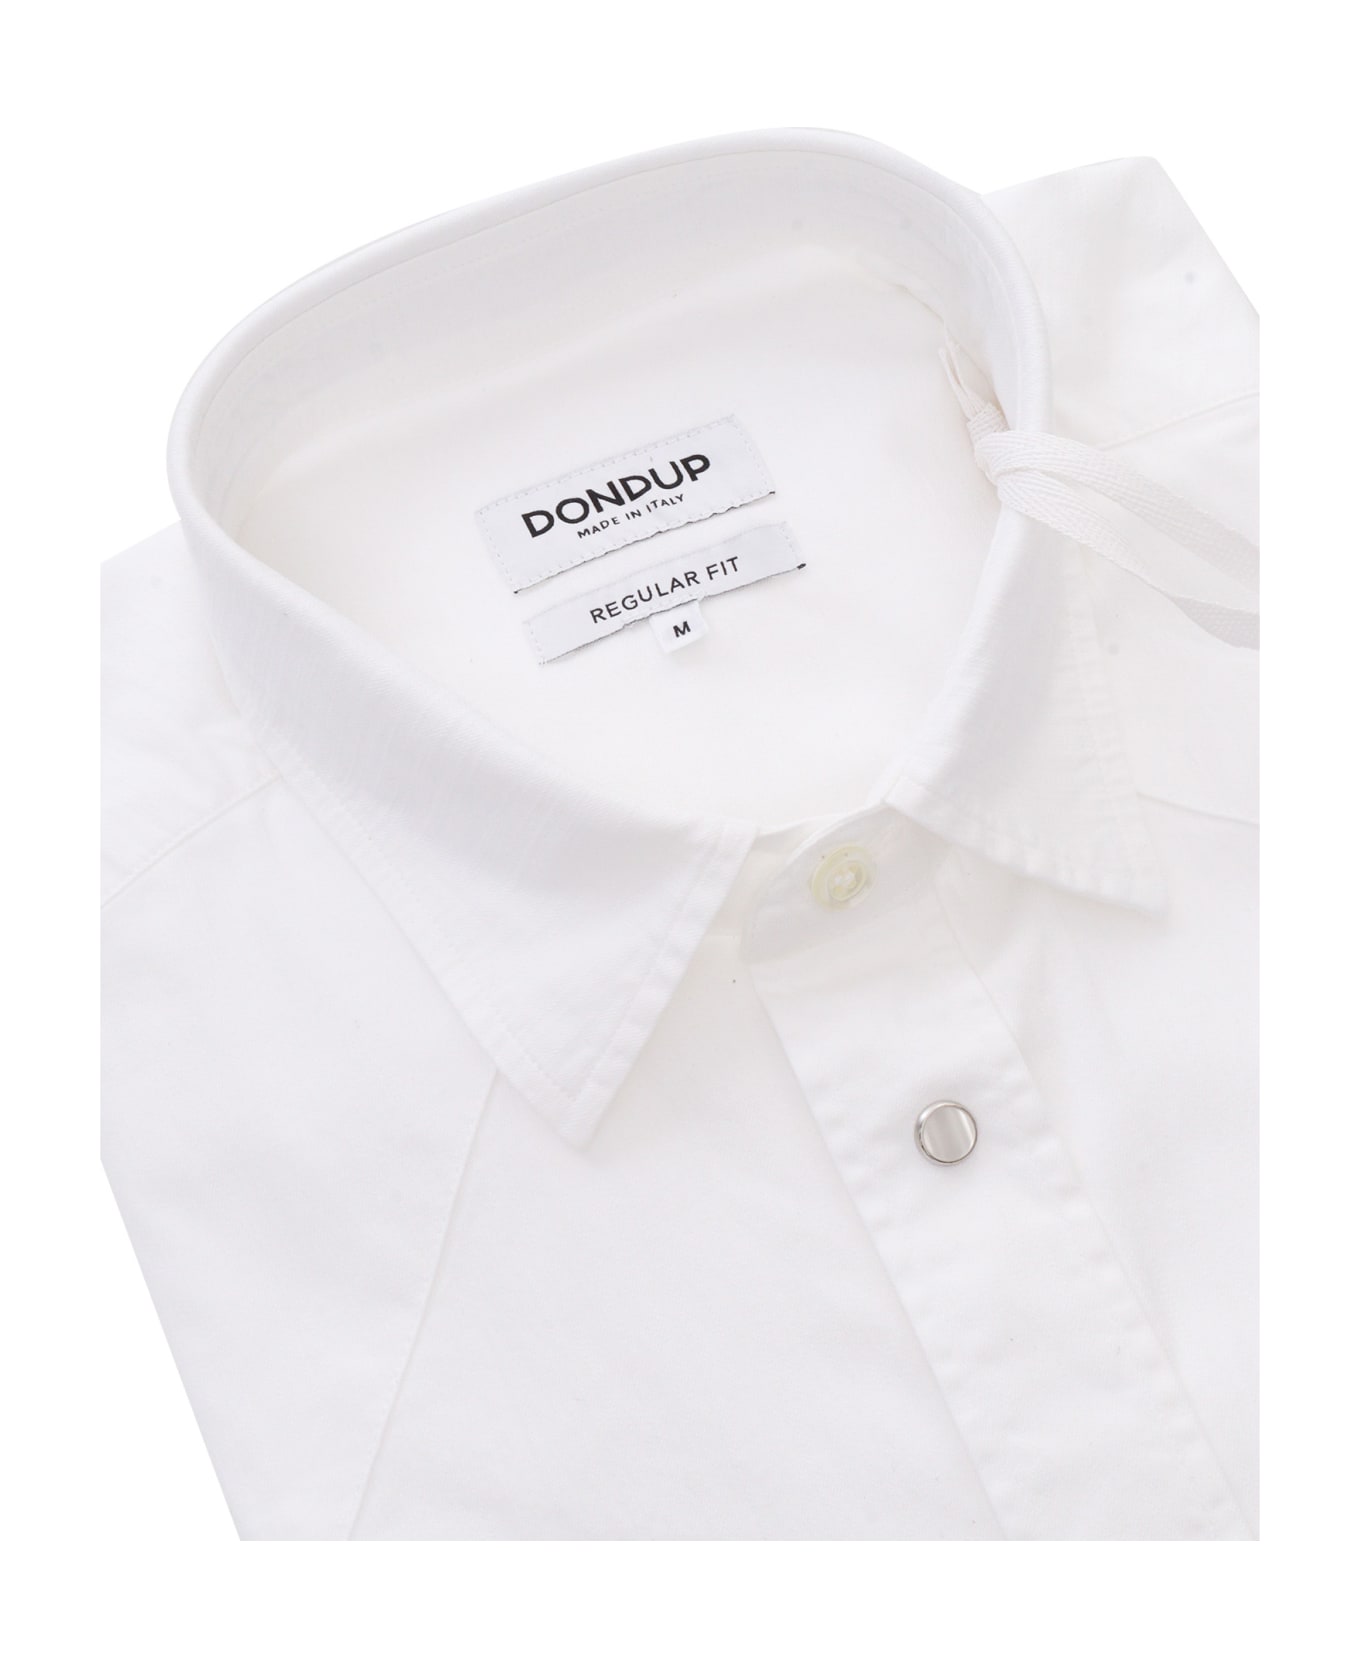 Dondup White Shirt With Pocket - WHITE